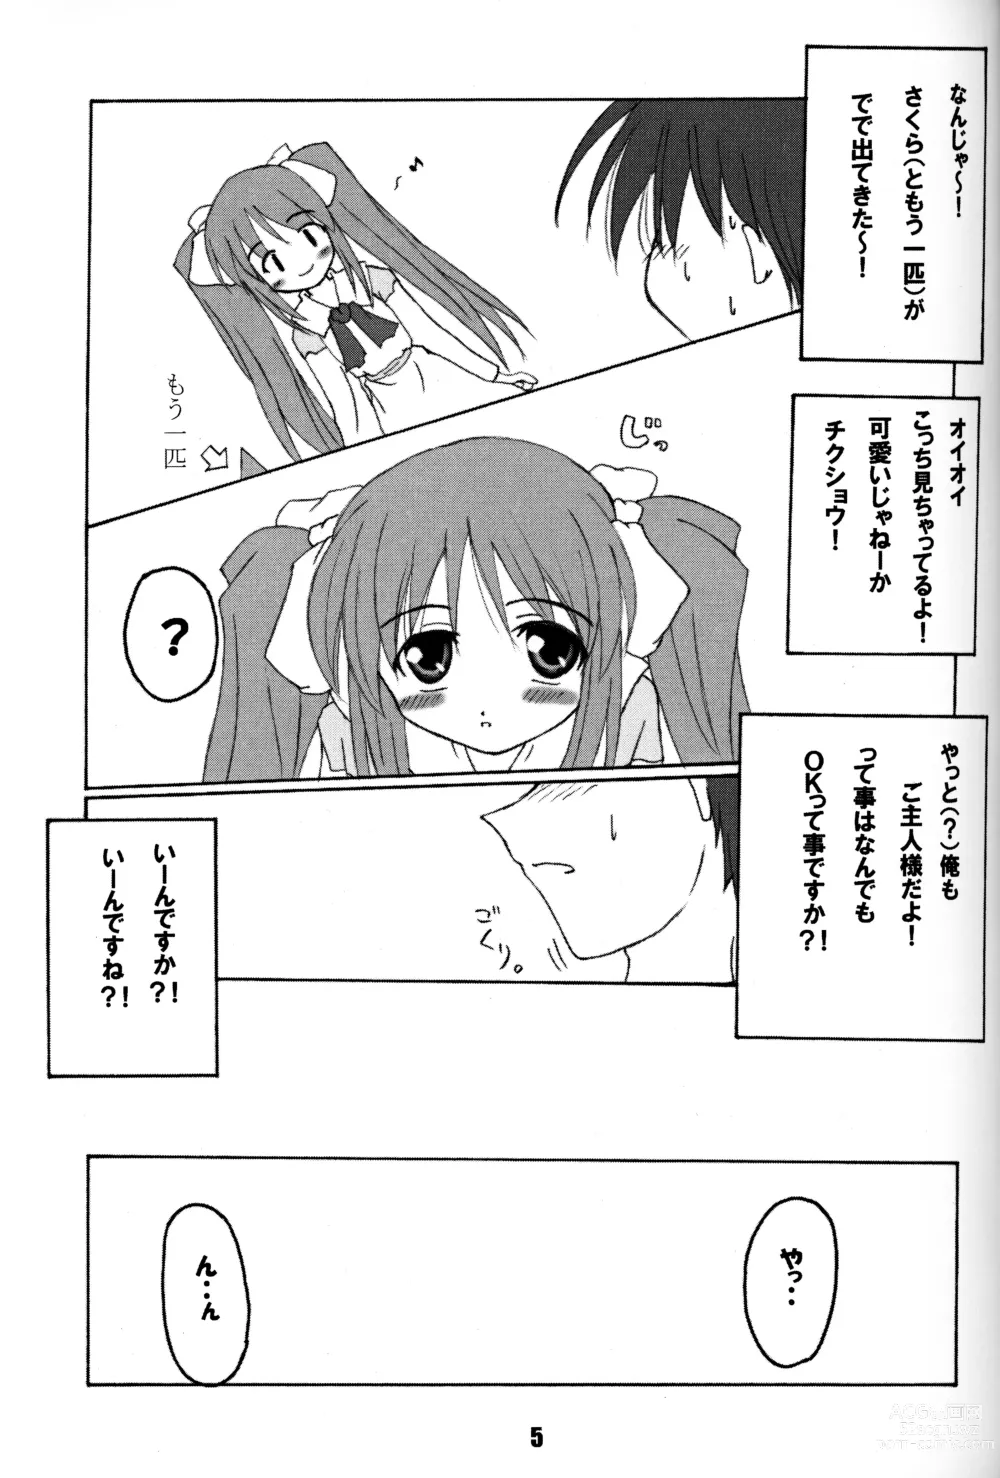 Page 4 of doujinshi Rollin 9